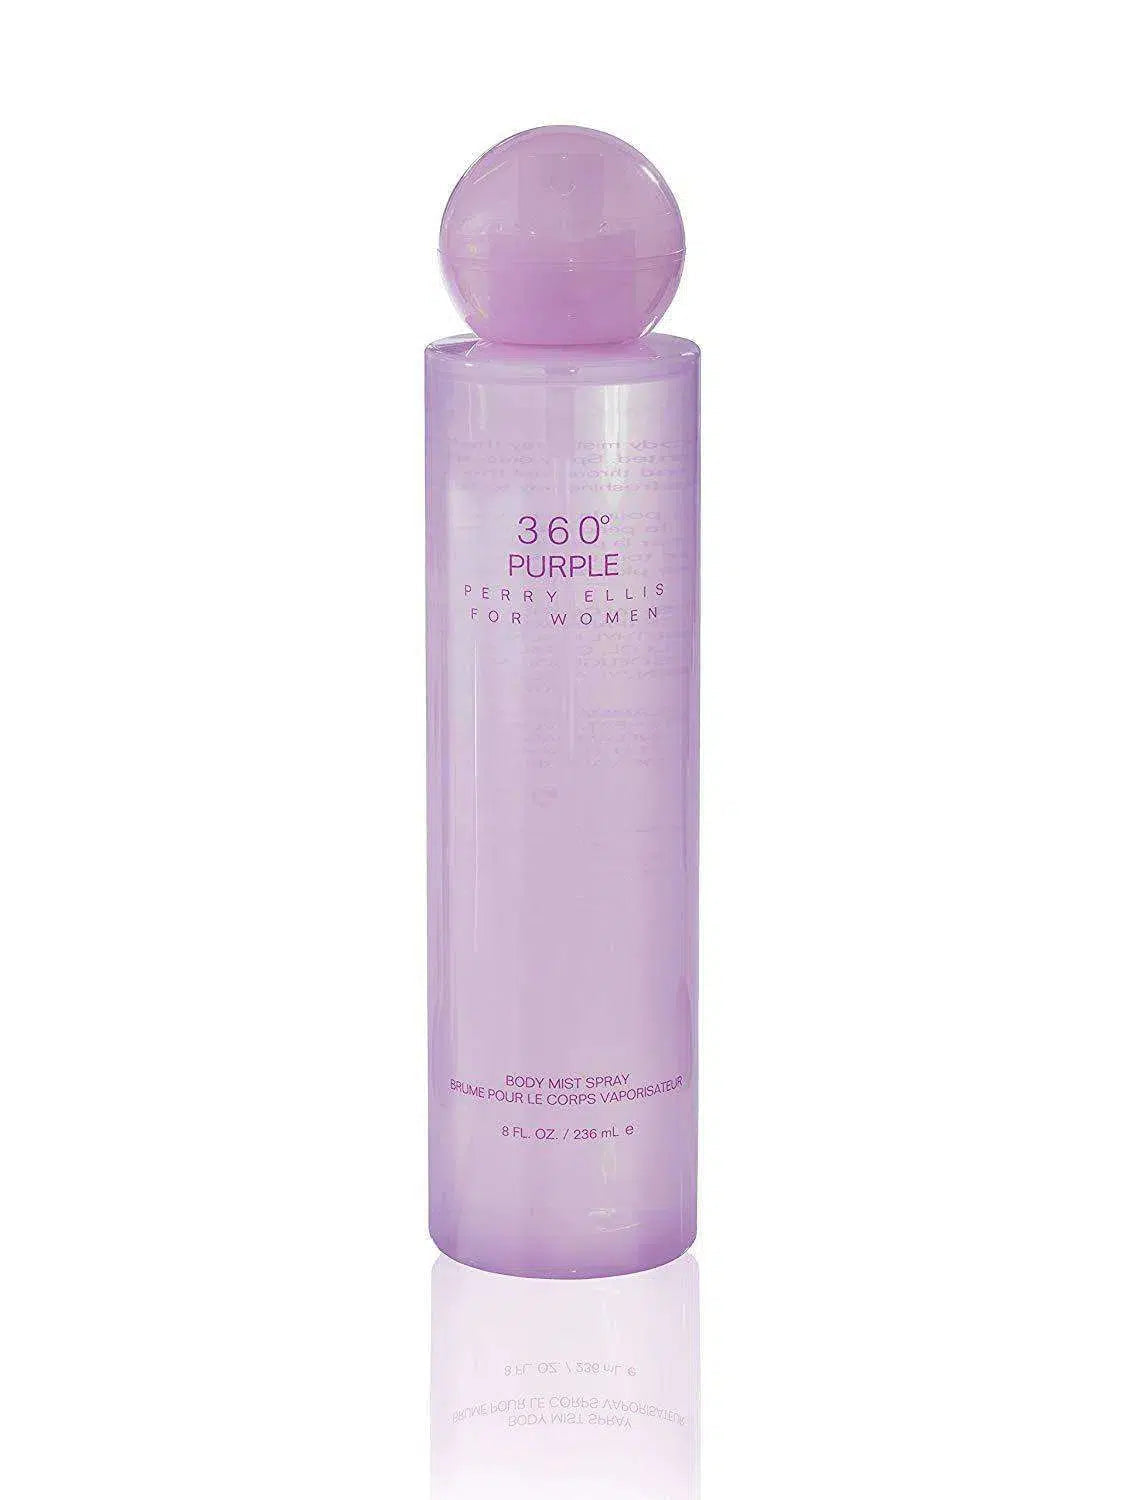 Perry Ellis 360 Degrees Purple Body Mist Spray 236ml - Perfume Philippines